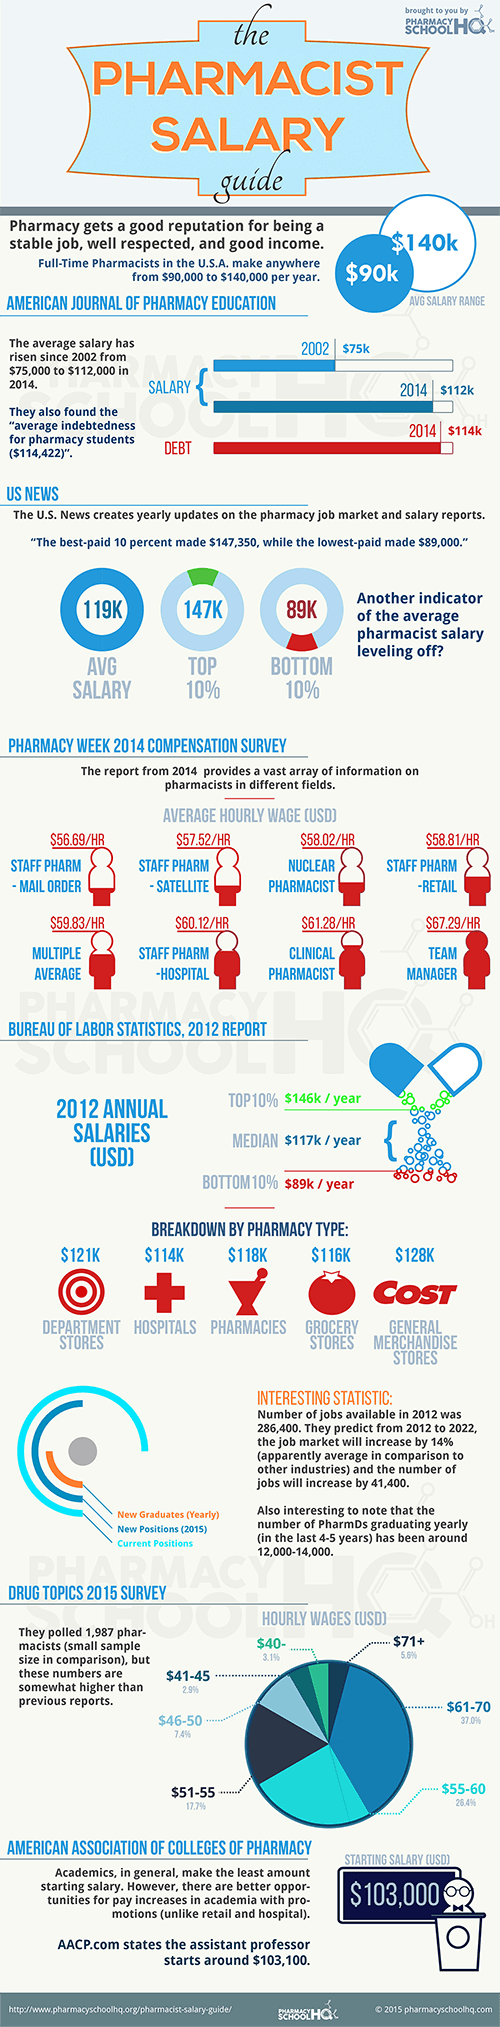 Pharmacist Salary Guide 2015 from Pharmacy School HQ